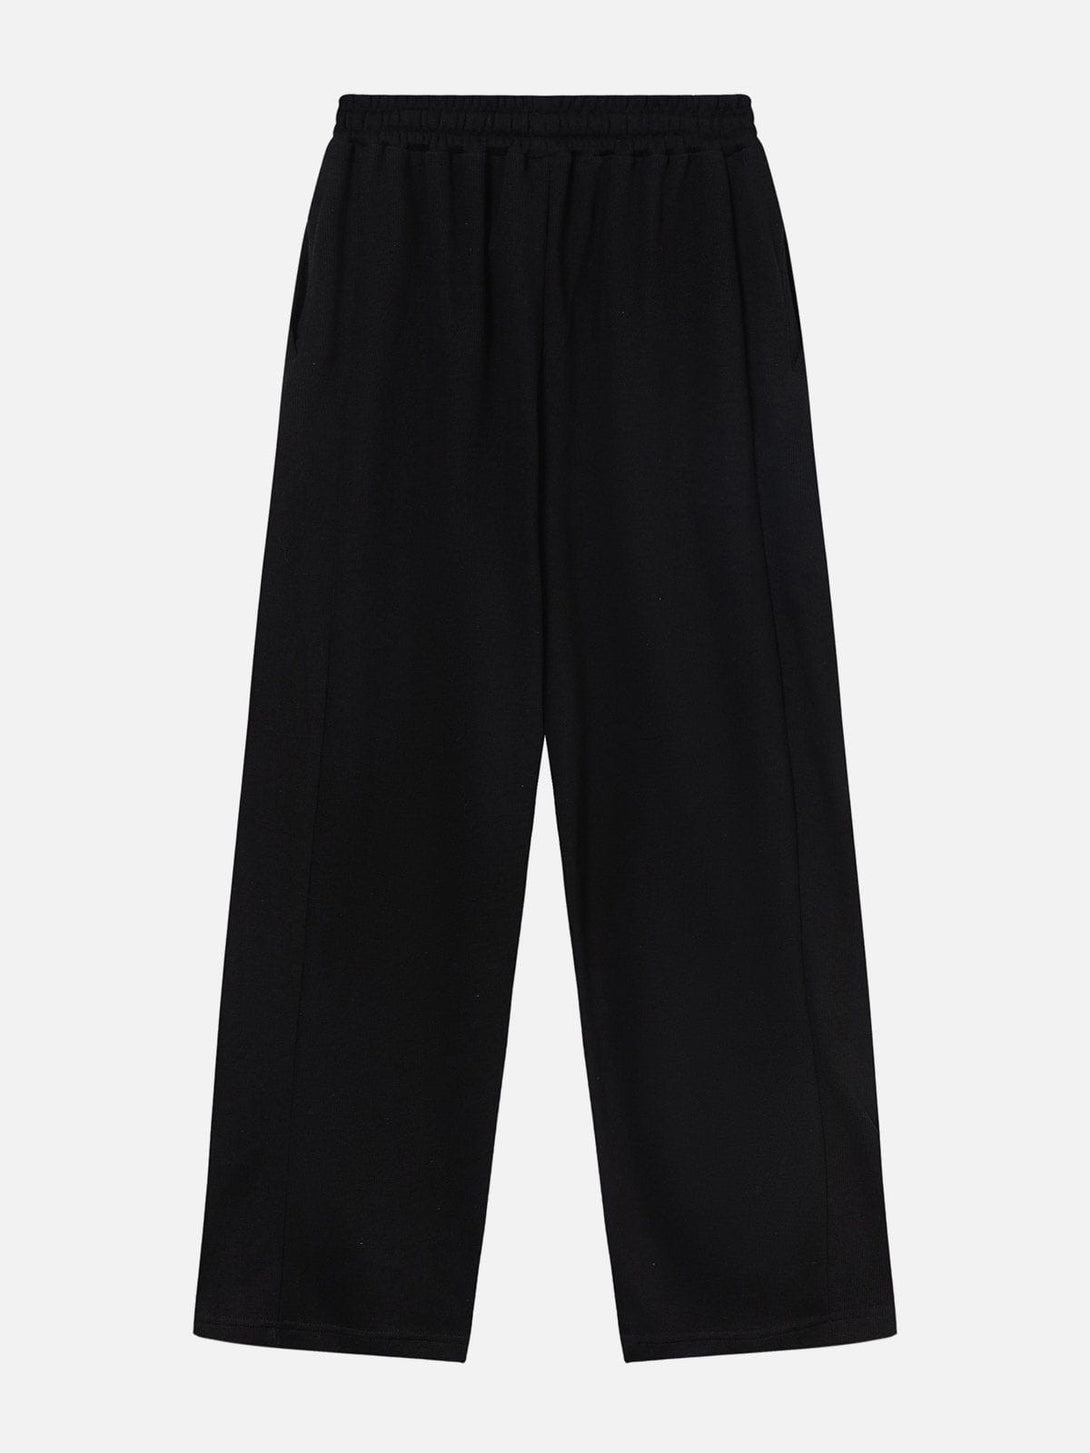 Levefly - Side Curve Stripe Sweatpants - Streetwear Fashion - levefly.com